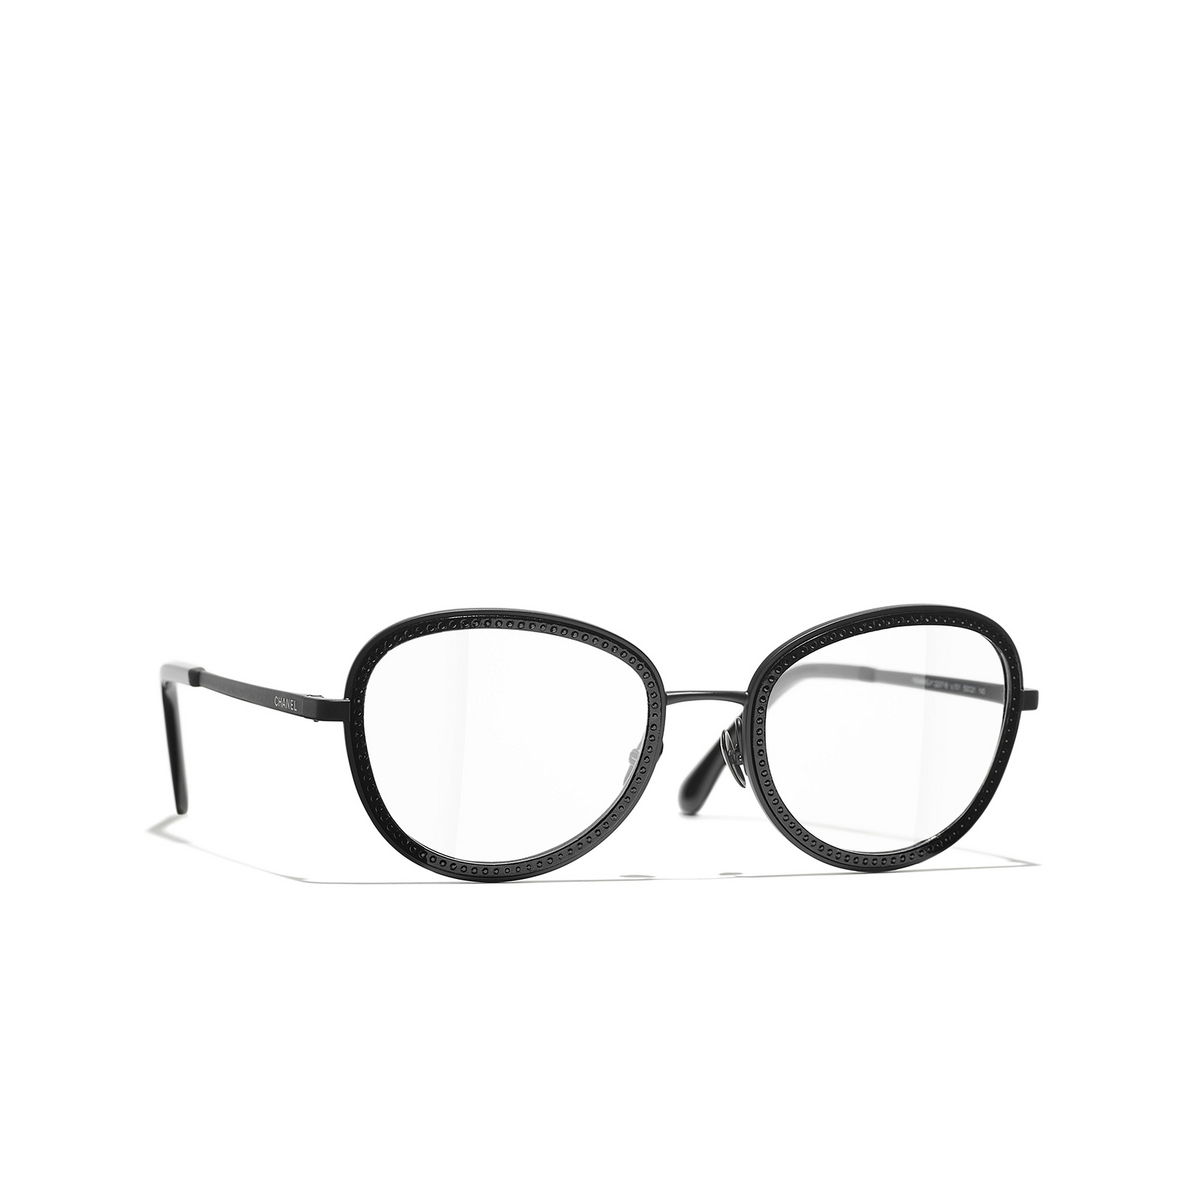 CHANEL pantos Eyeglasses C101 Black